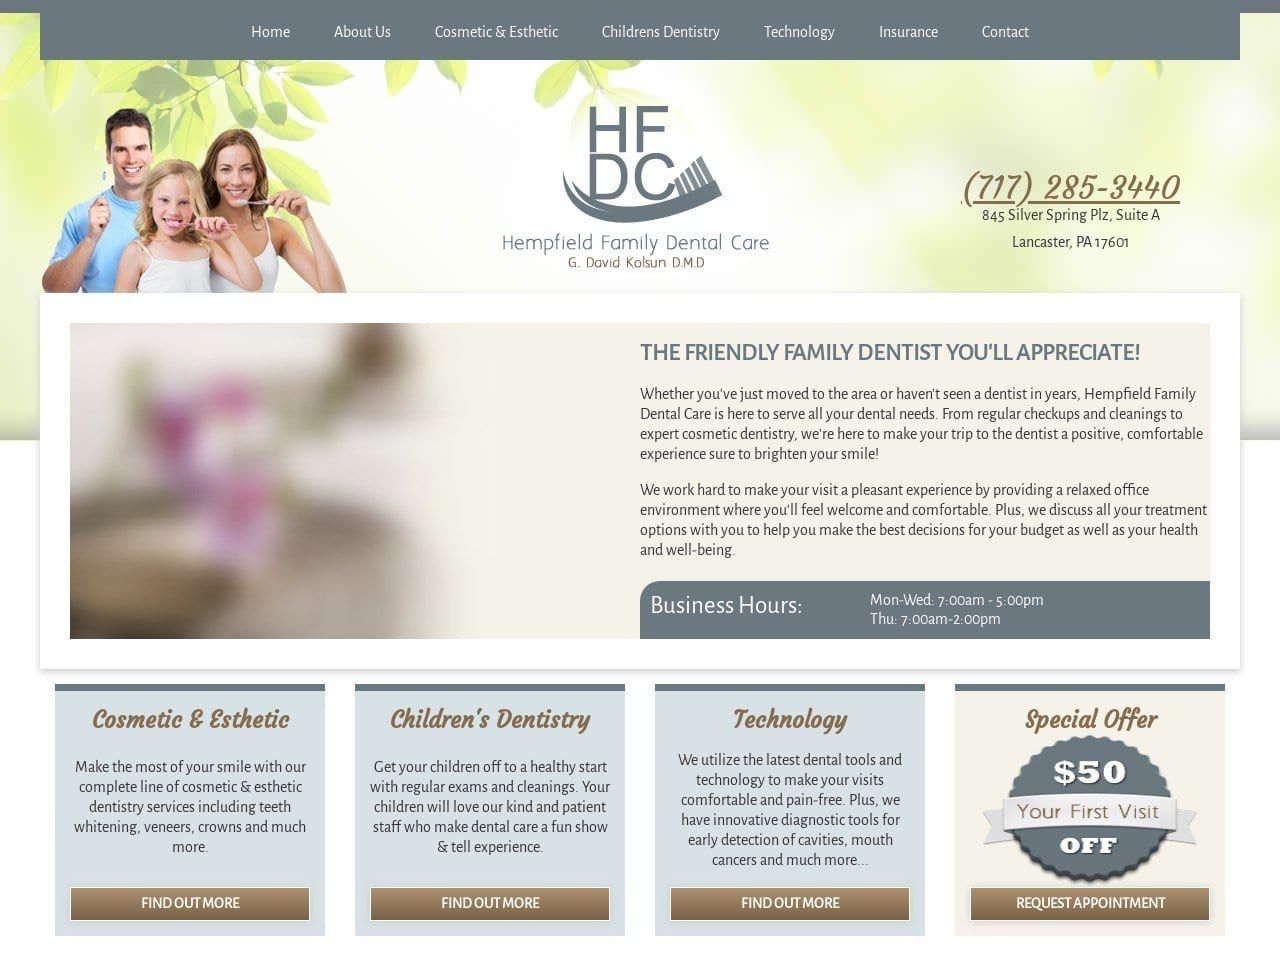 Hempfield Family Dental Care Website Screenshot from hempfieldfamilydentalcare.com